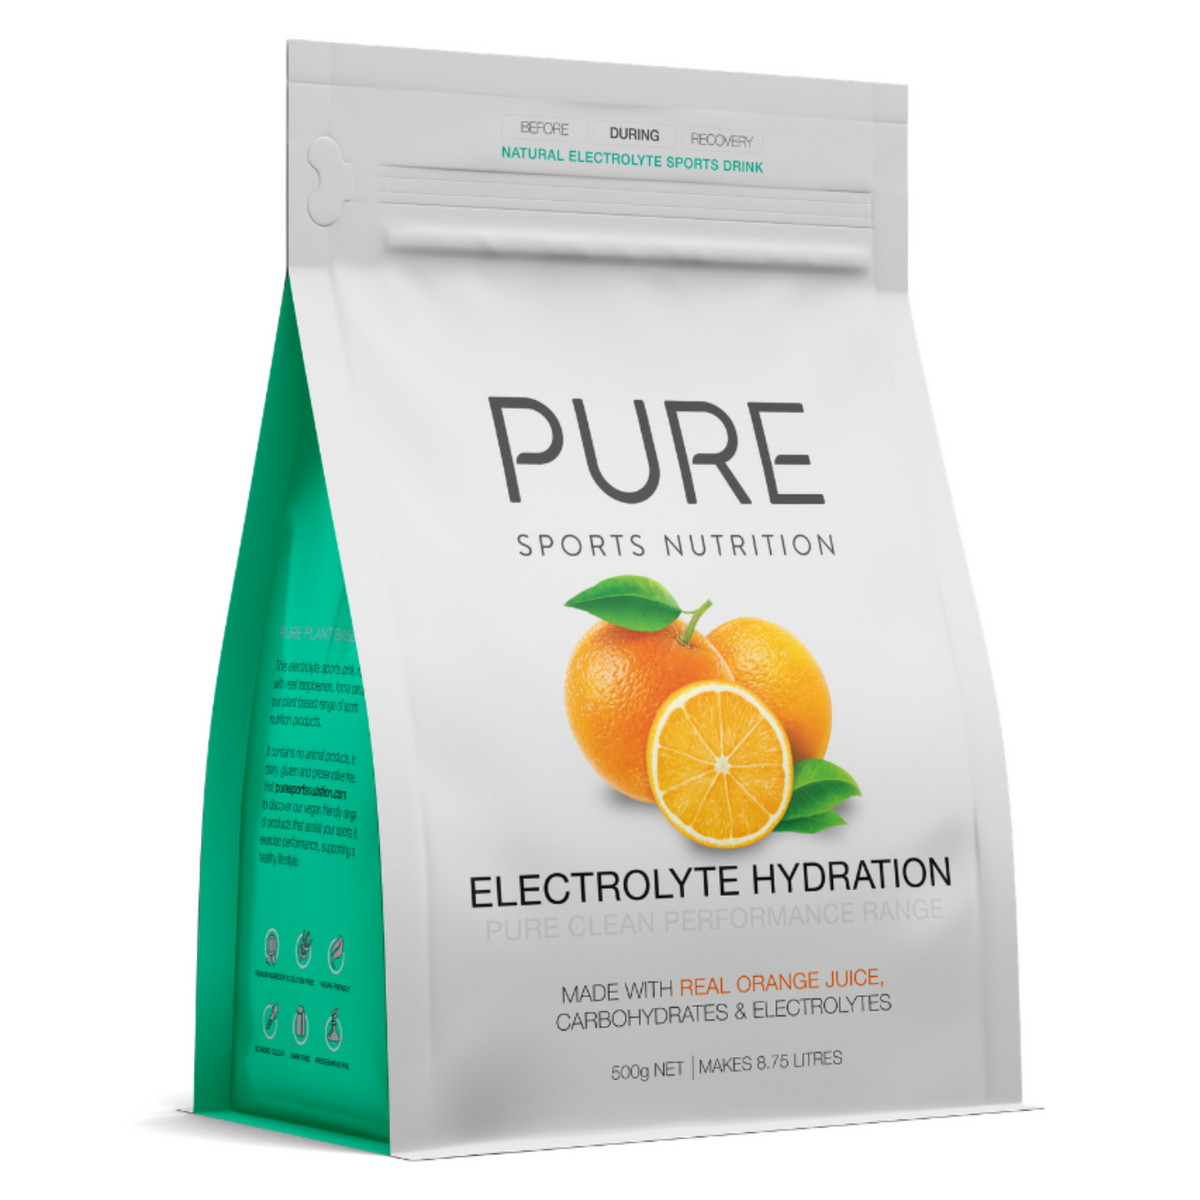 PURE Sports Nutrition Orange Electrolyte Hydration drink mix